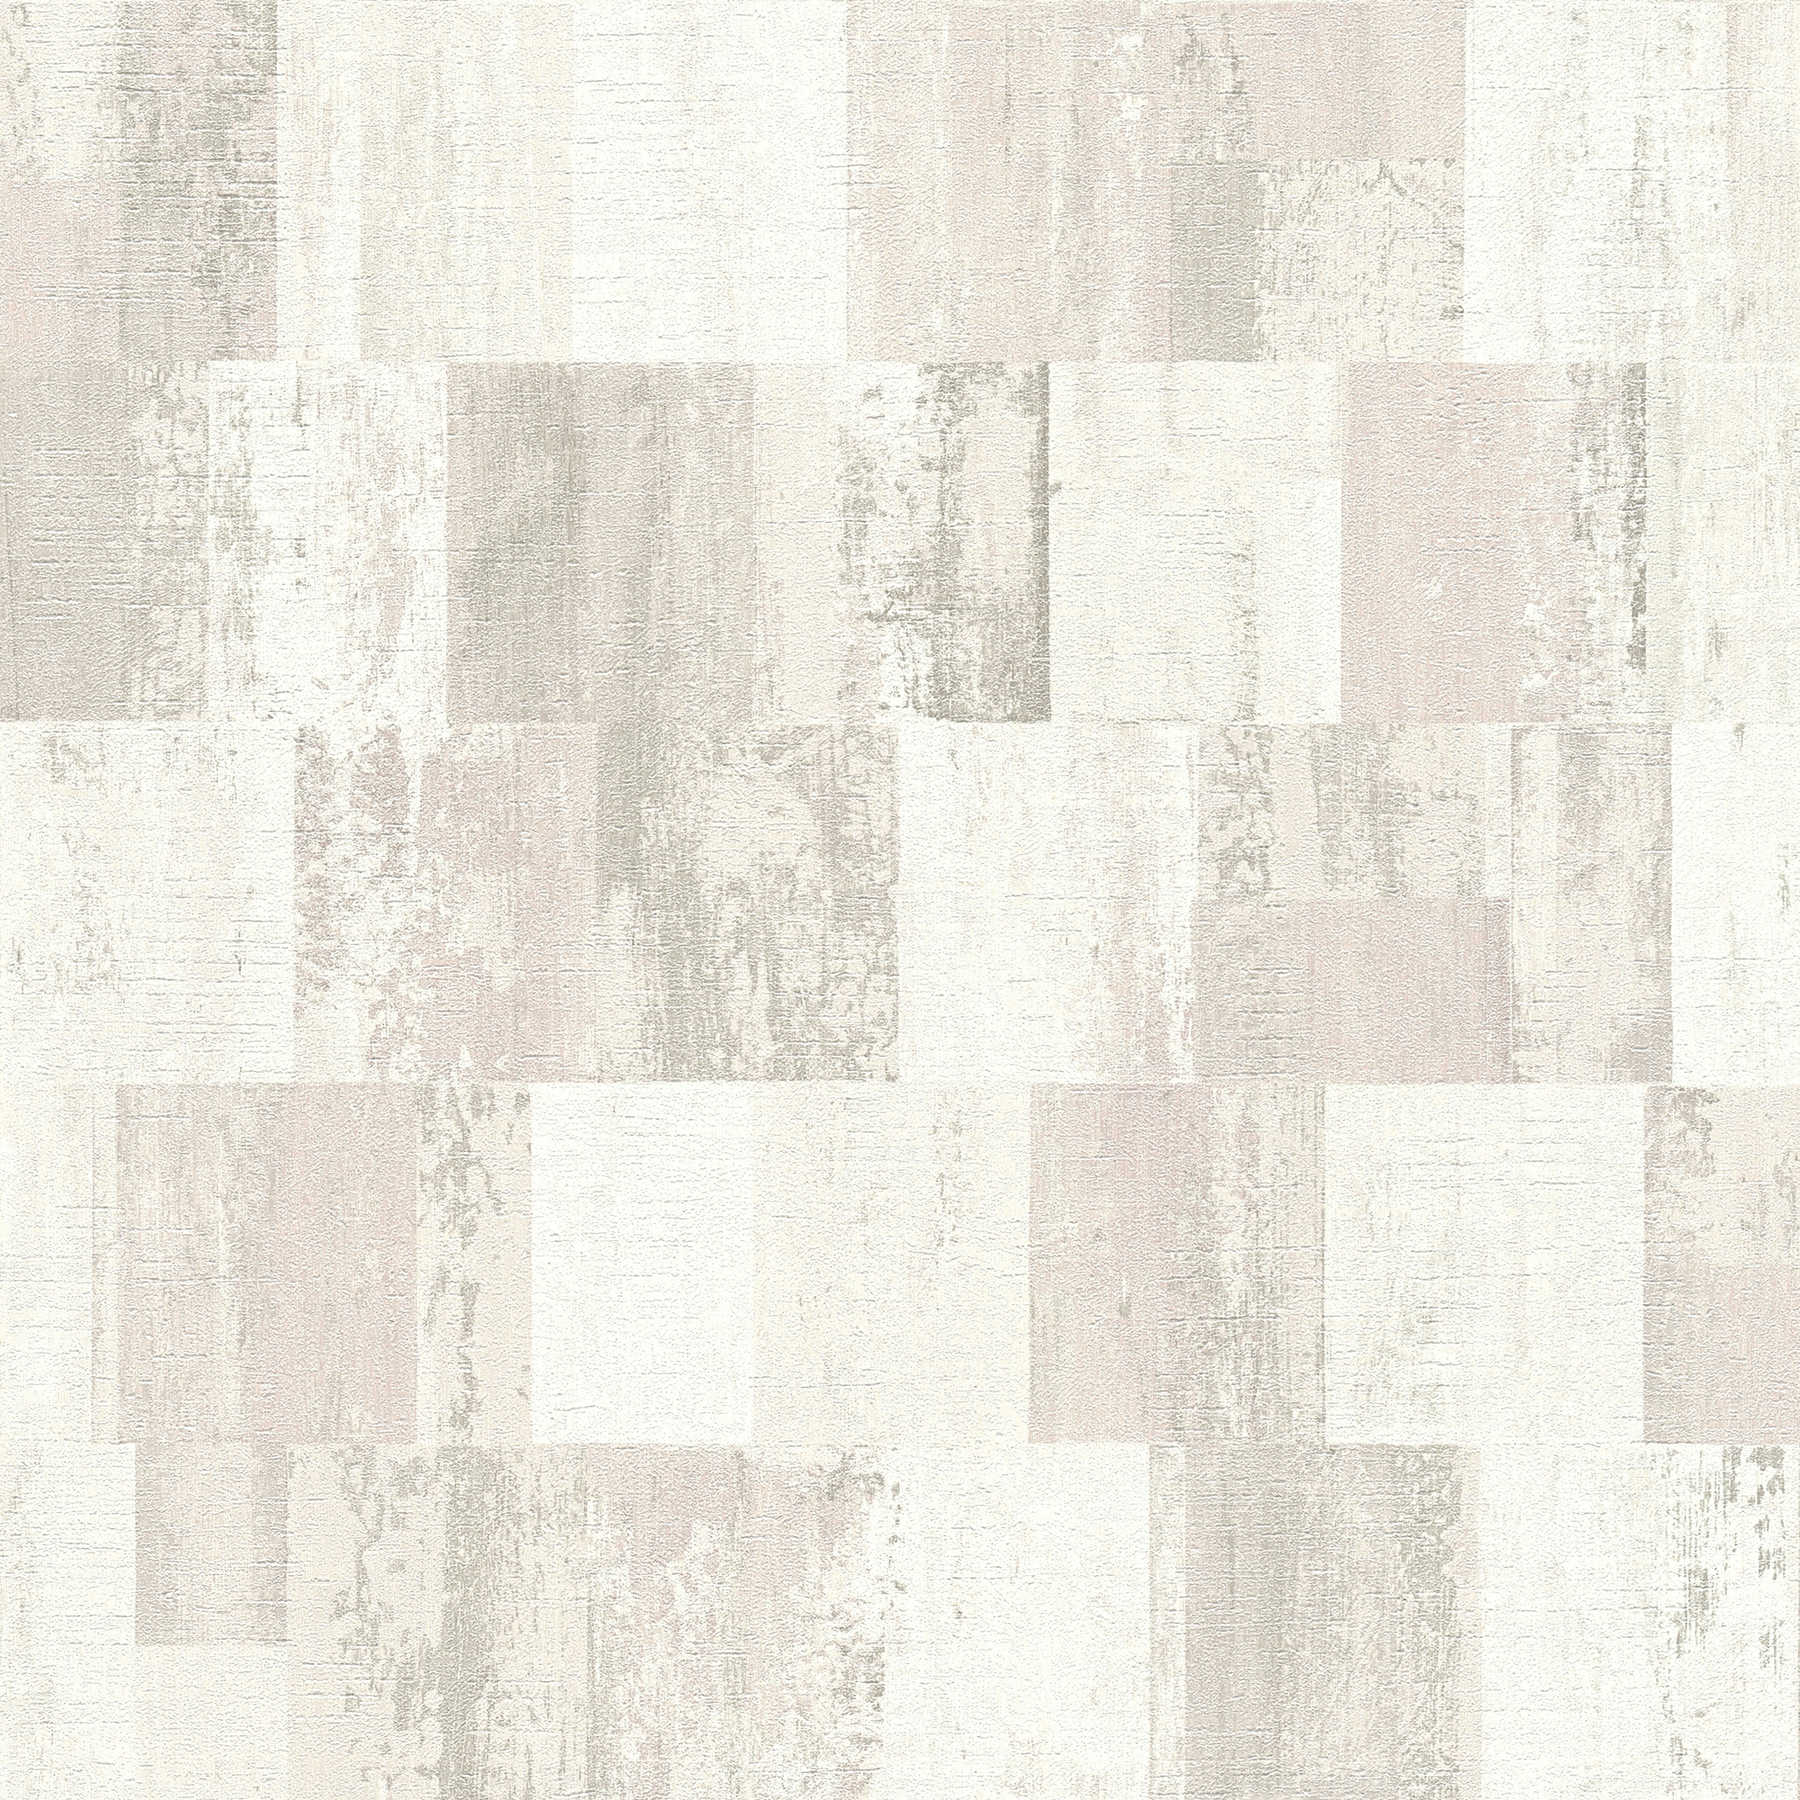         Wood look mosaic wallpaper with texture design - cream, metallic
    